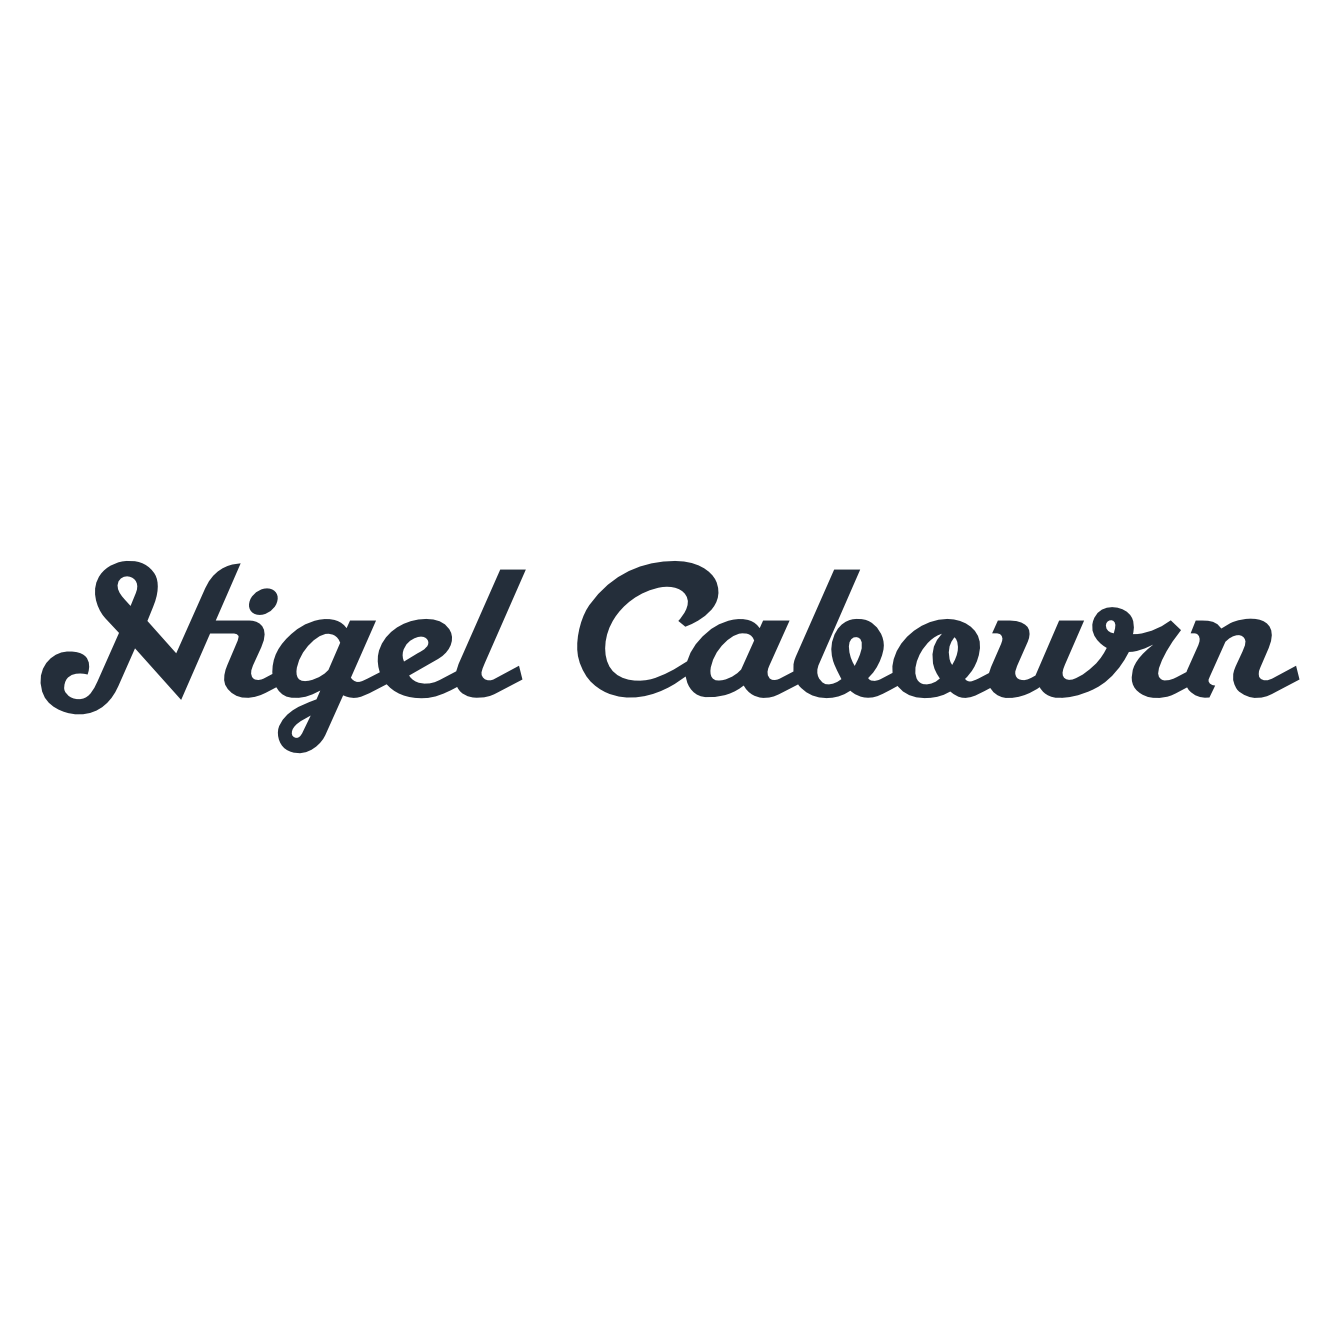 Nigel Cabourn brand logo